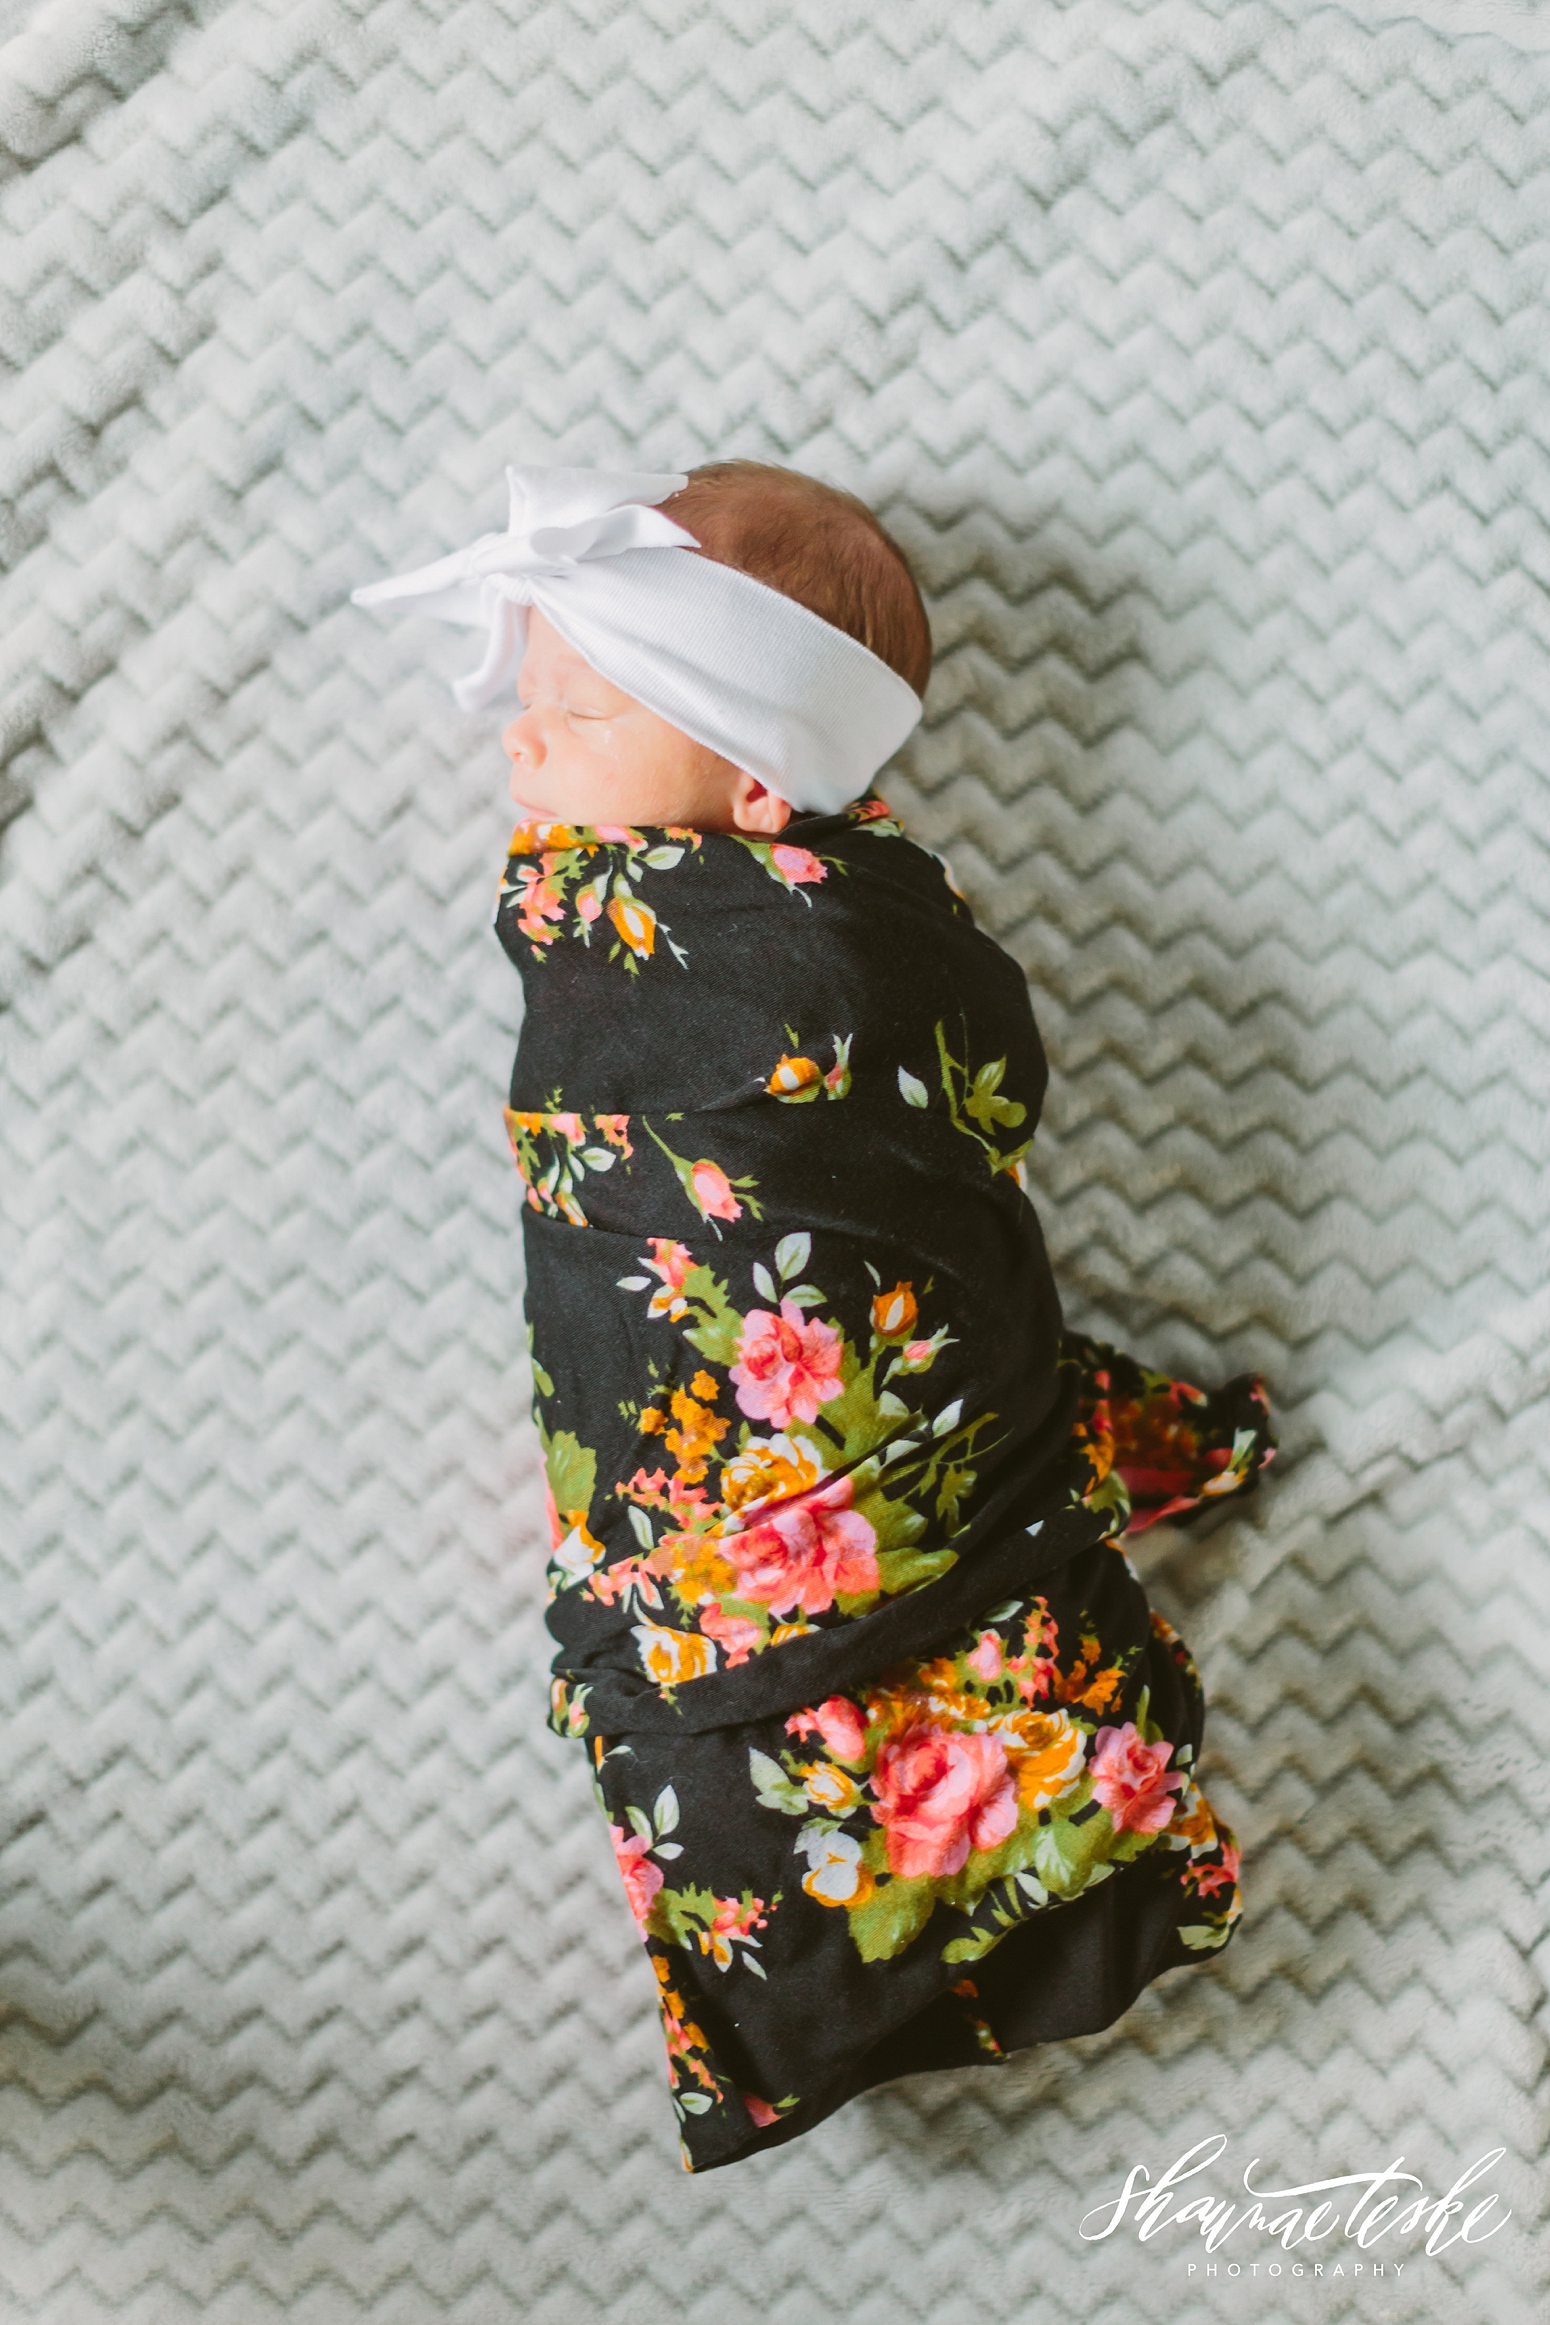 wisconsin-newborn-photographer-shaunae-teske-at-home-session-rosie-tara-31